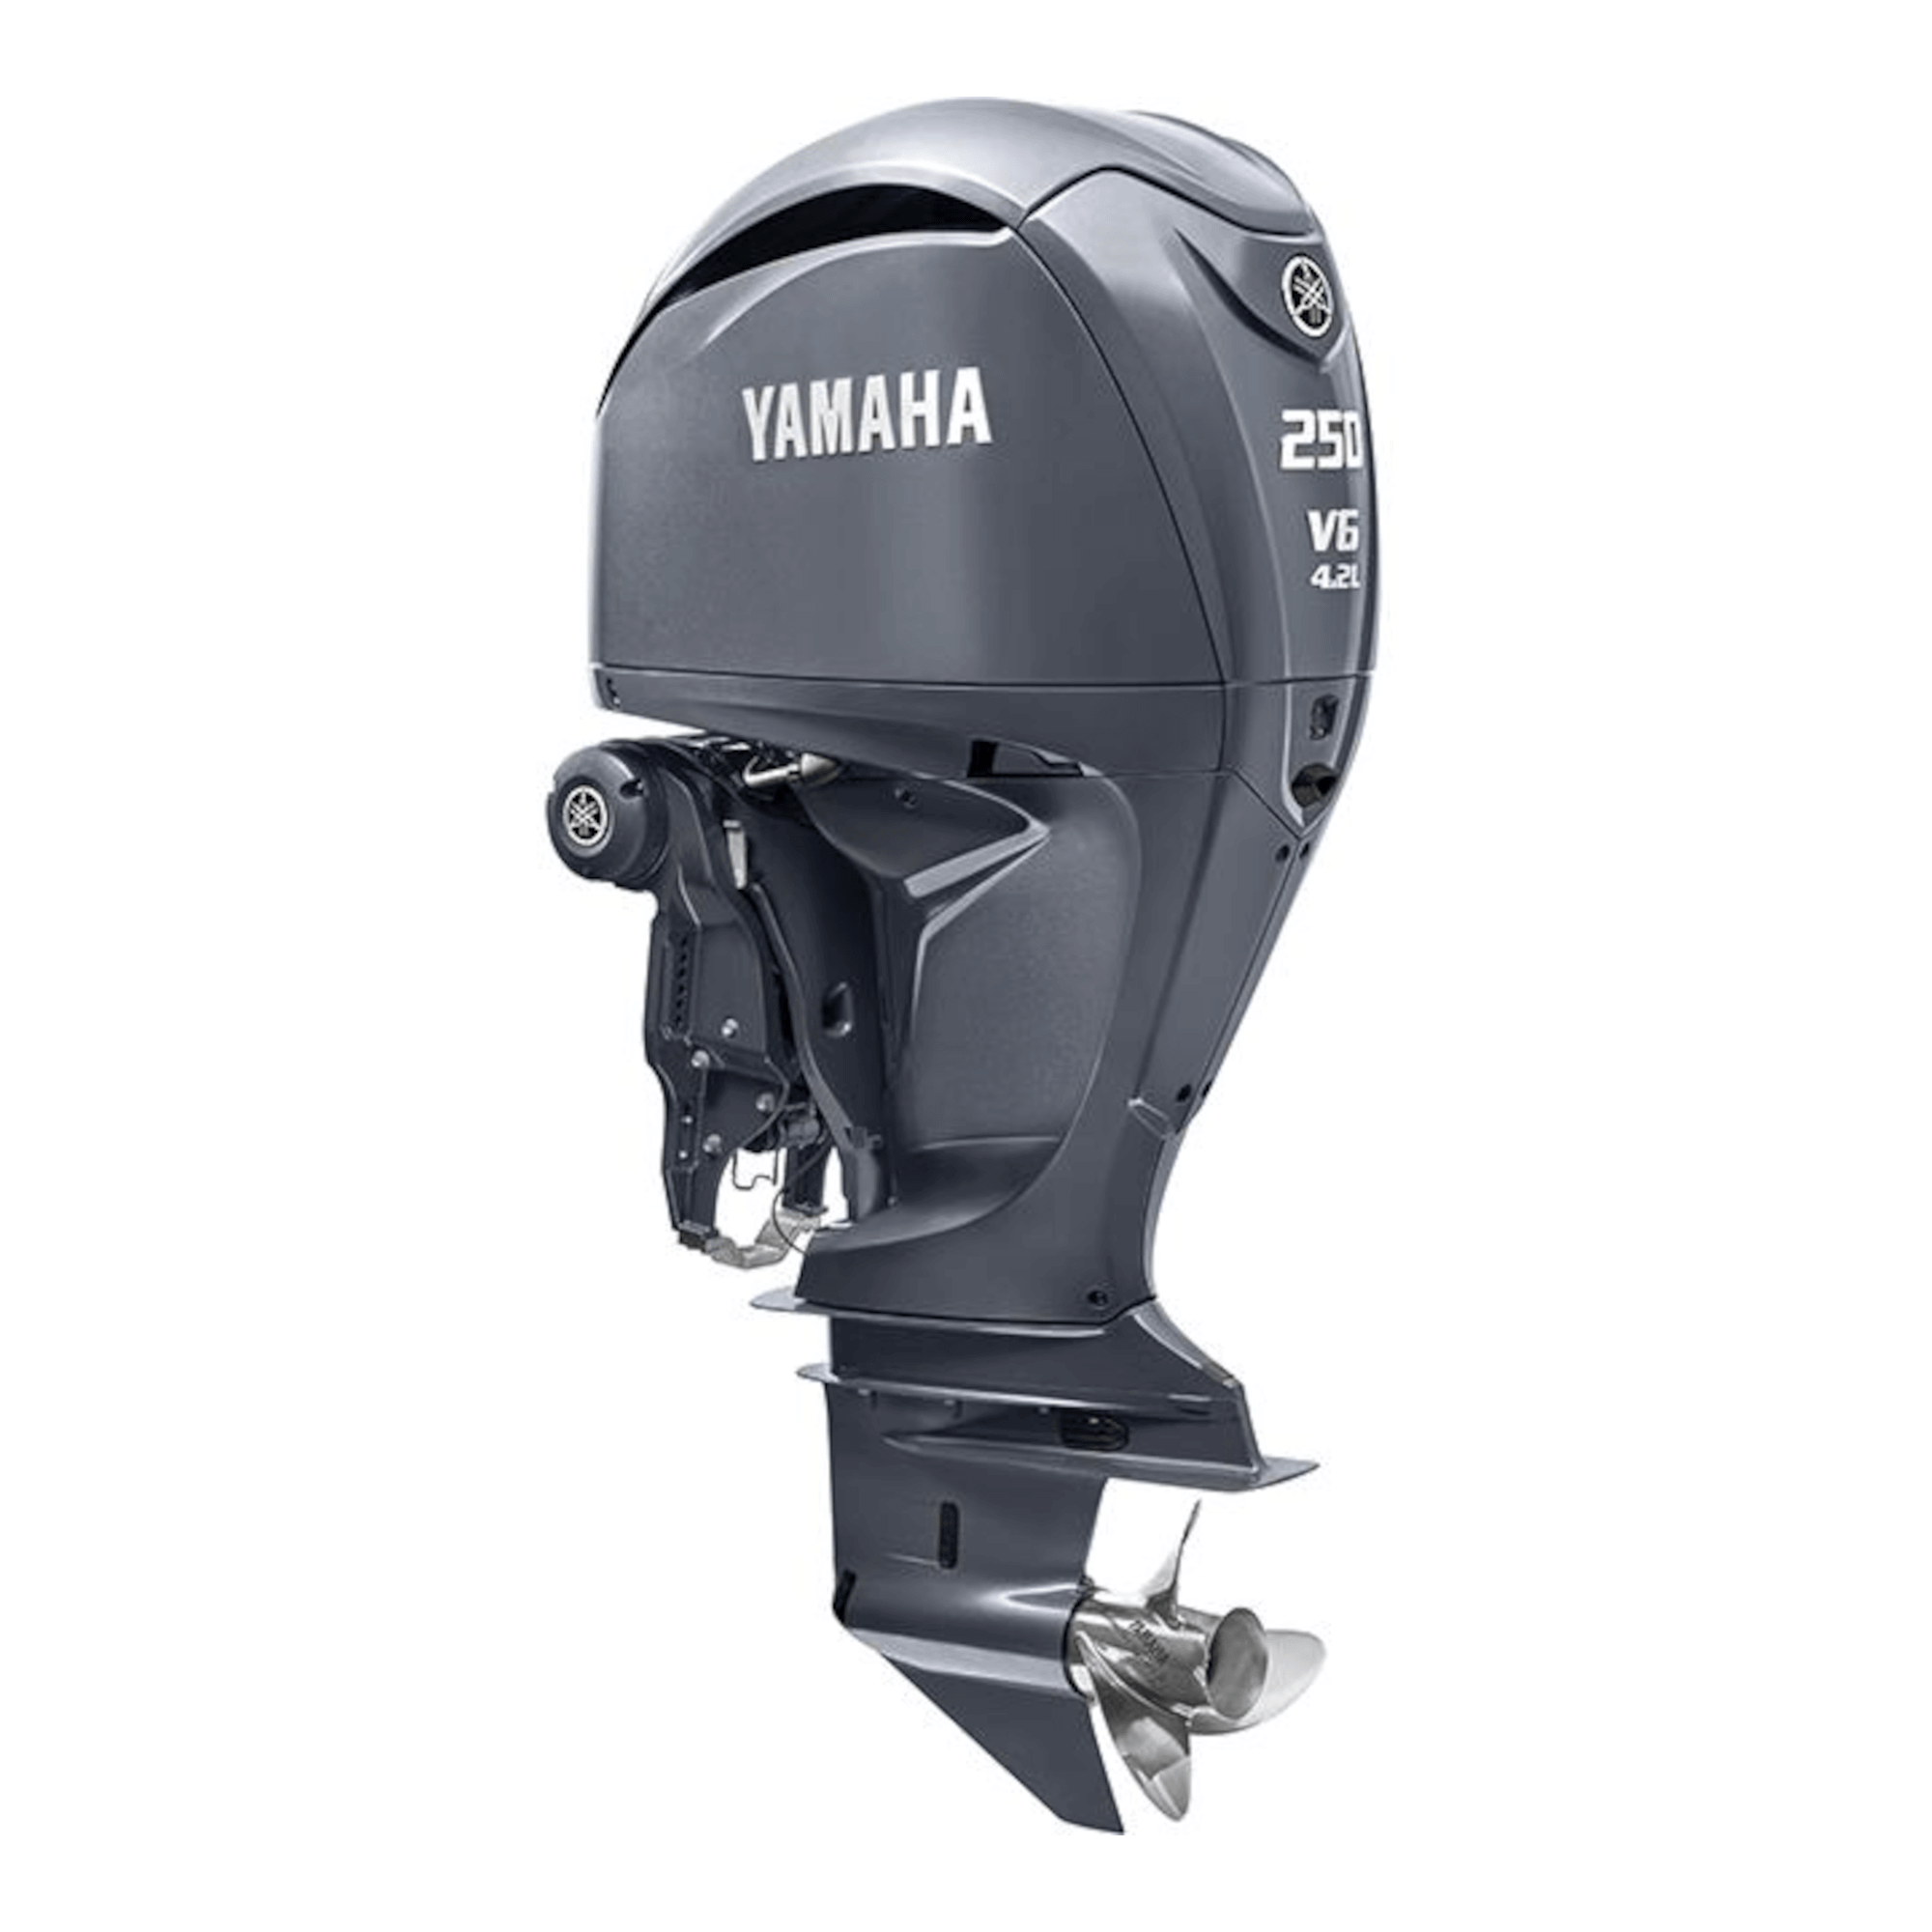 Yamaha päramootor F250 V6 hall-min